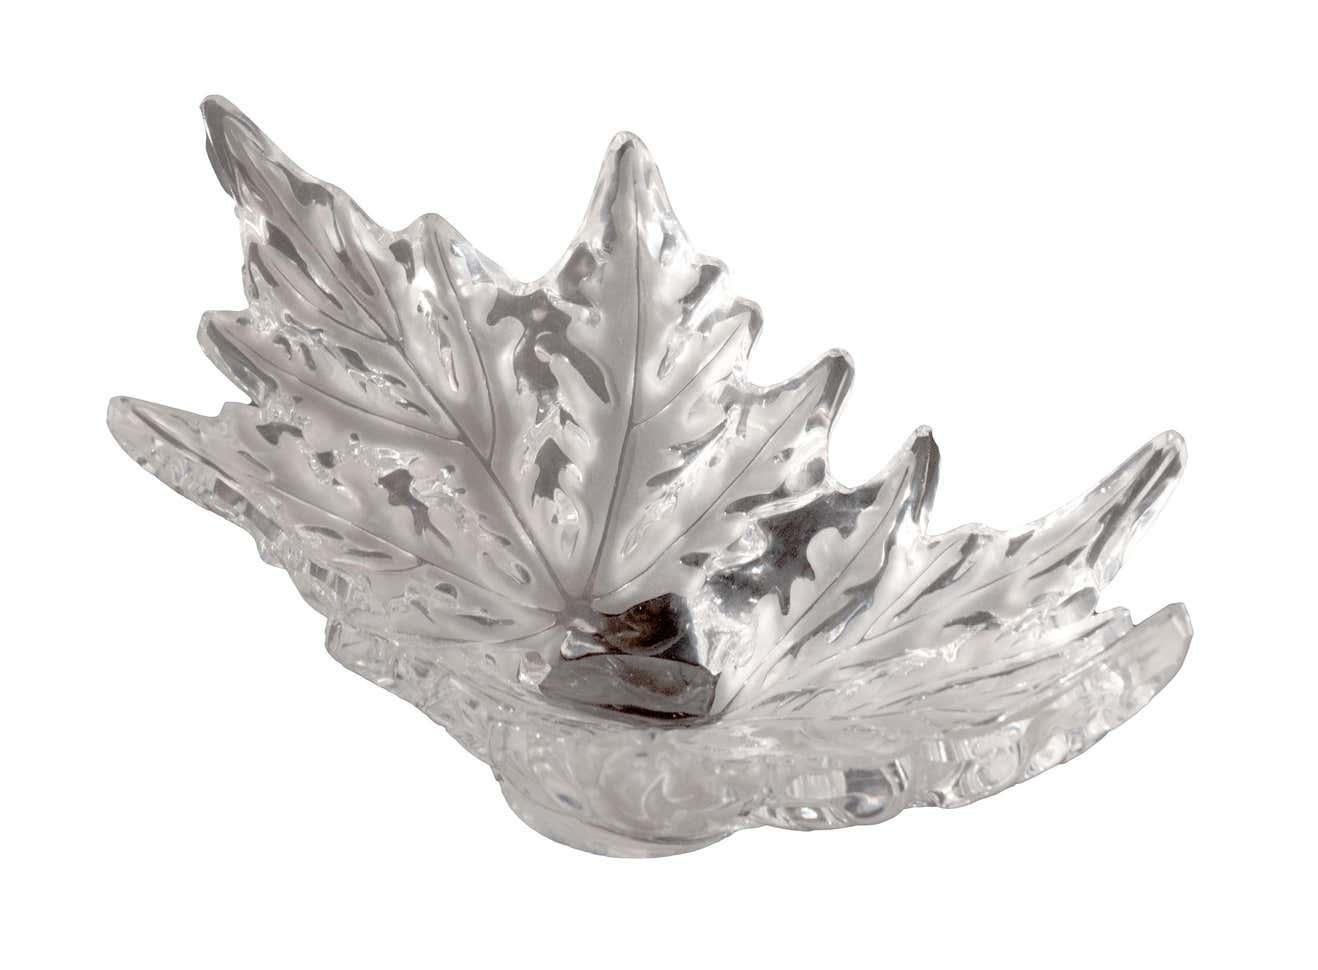 Vintage French Lalique Champs-Elysee Leaf Form Centerpiece Crystal Bowl 1